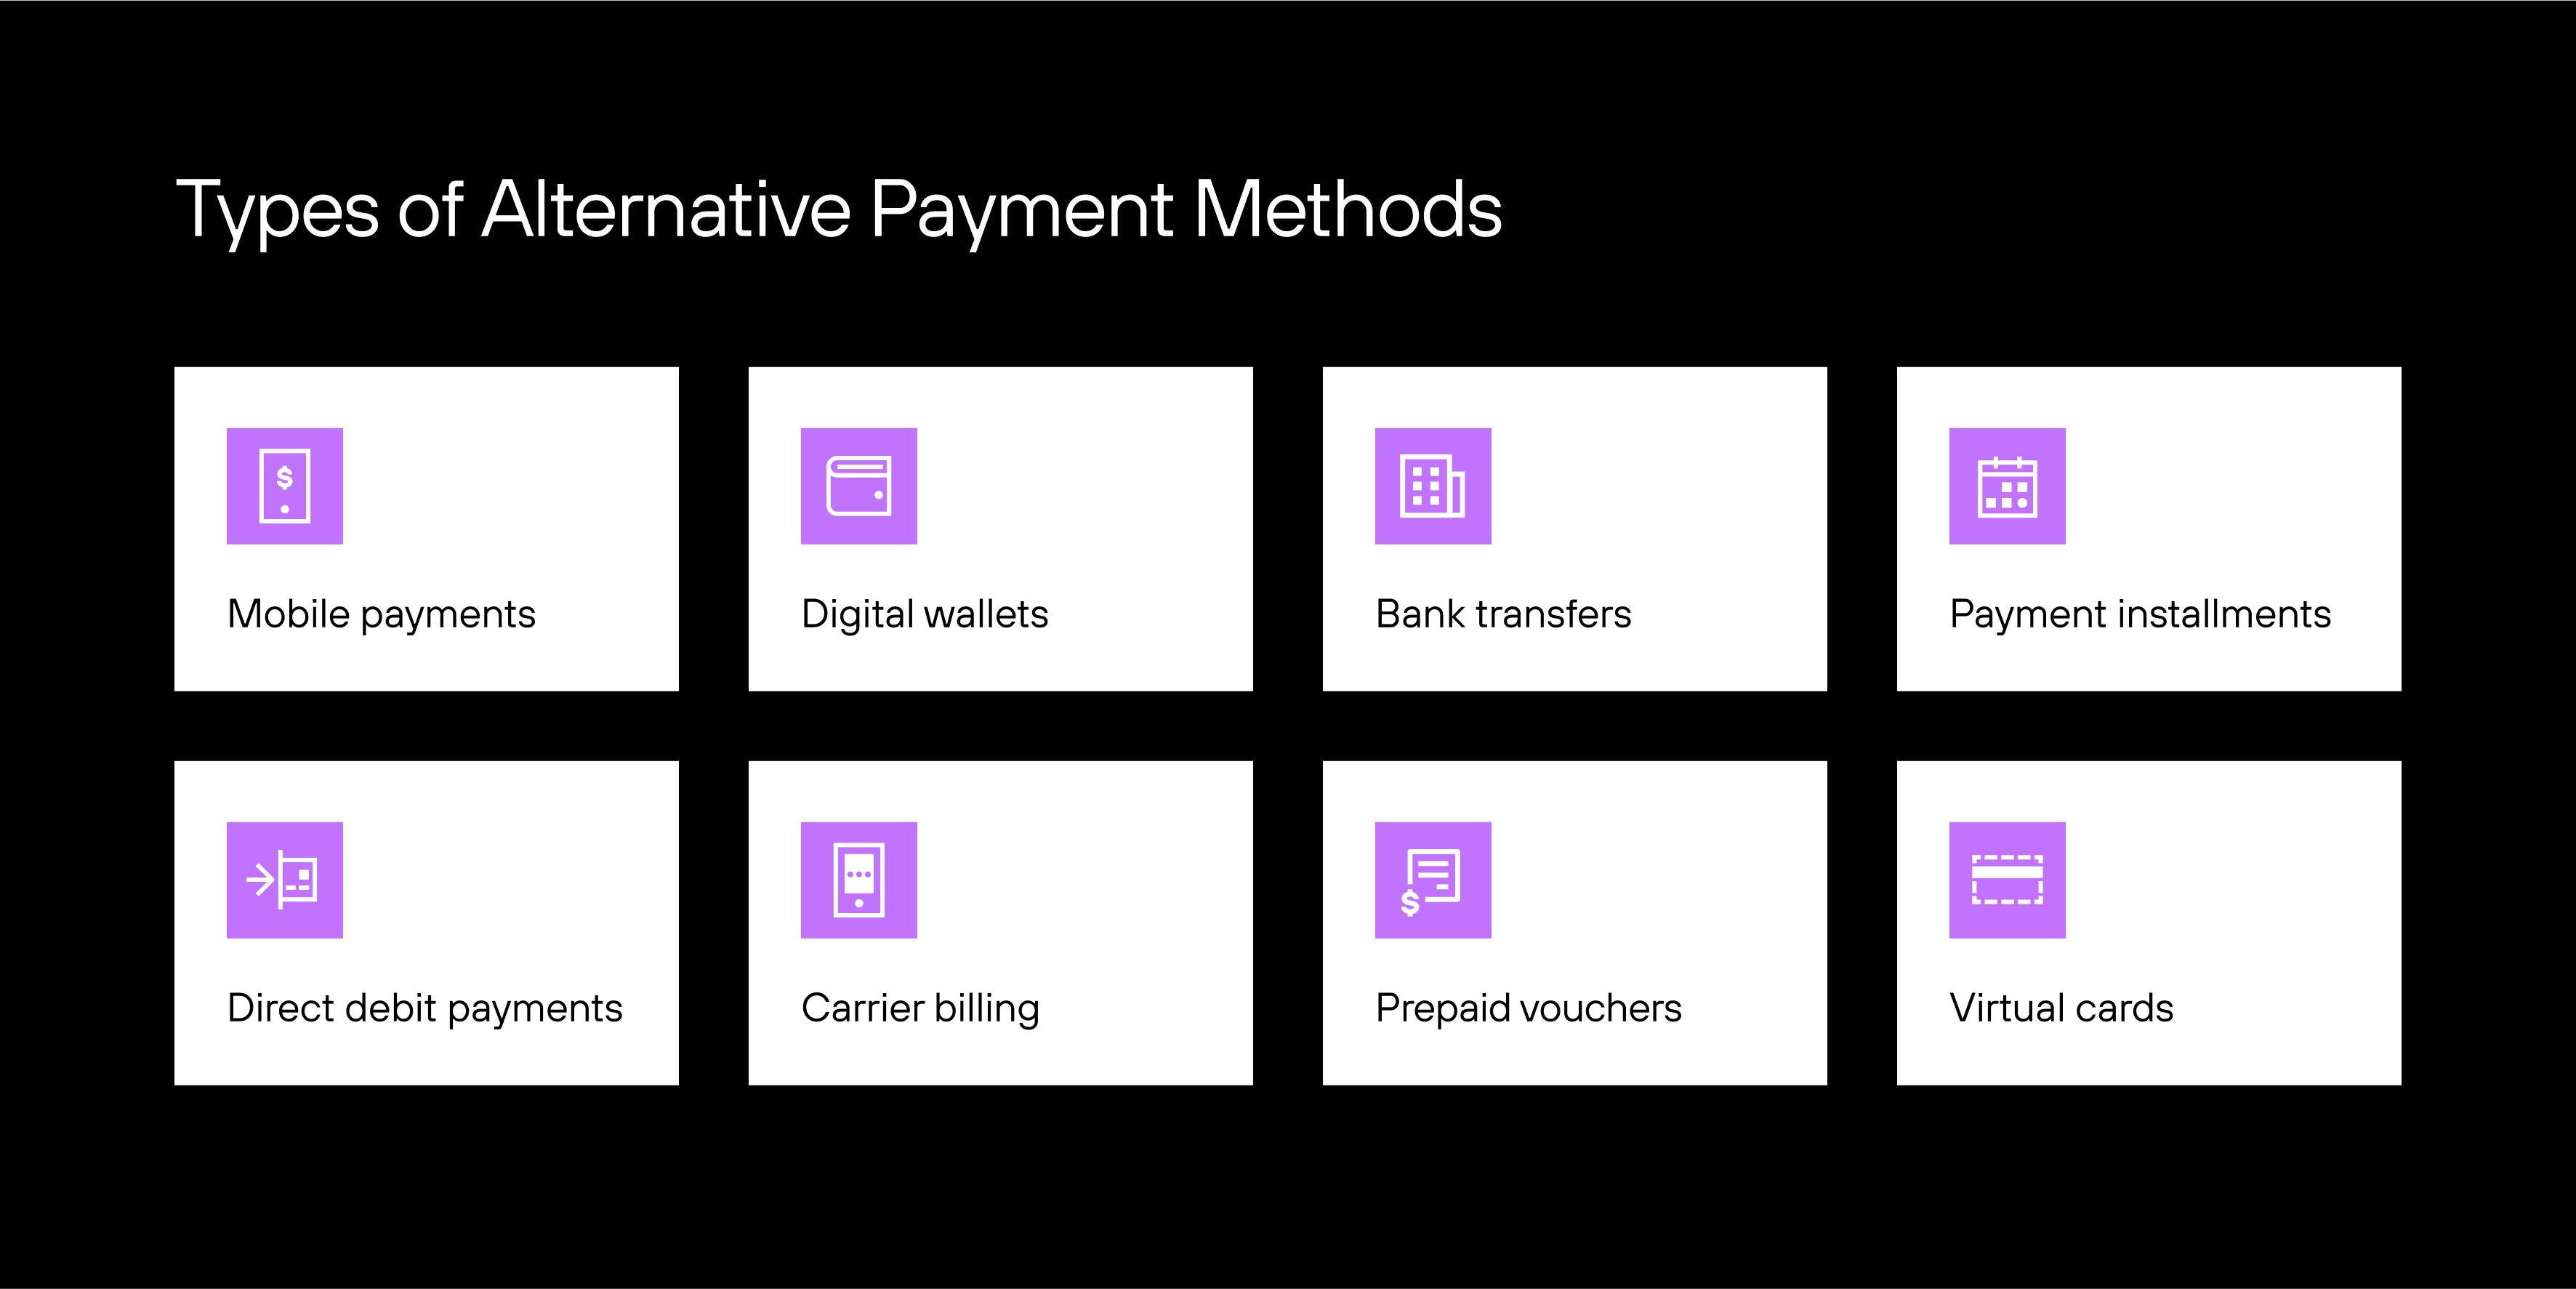 Types of Alternative Payment Methods